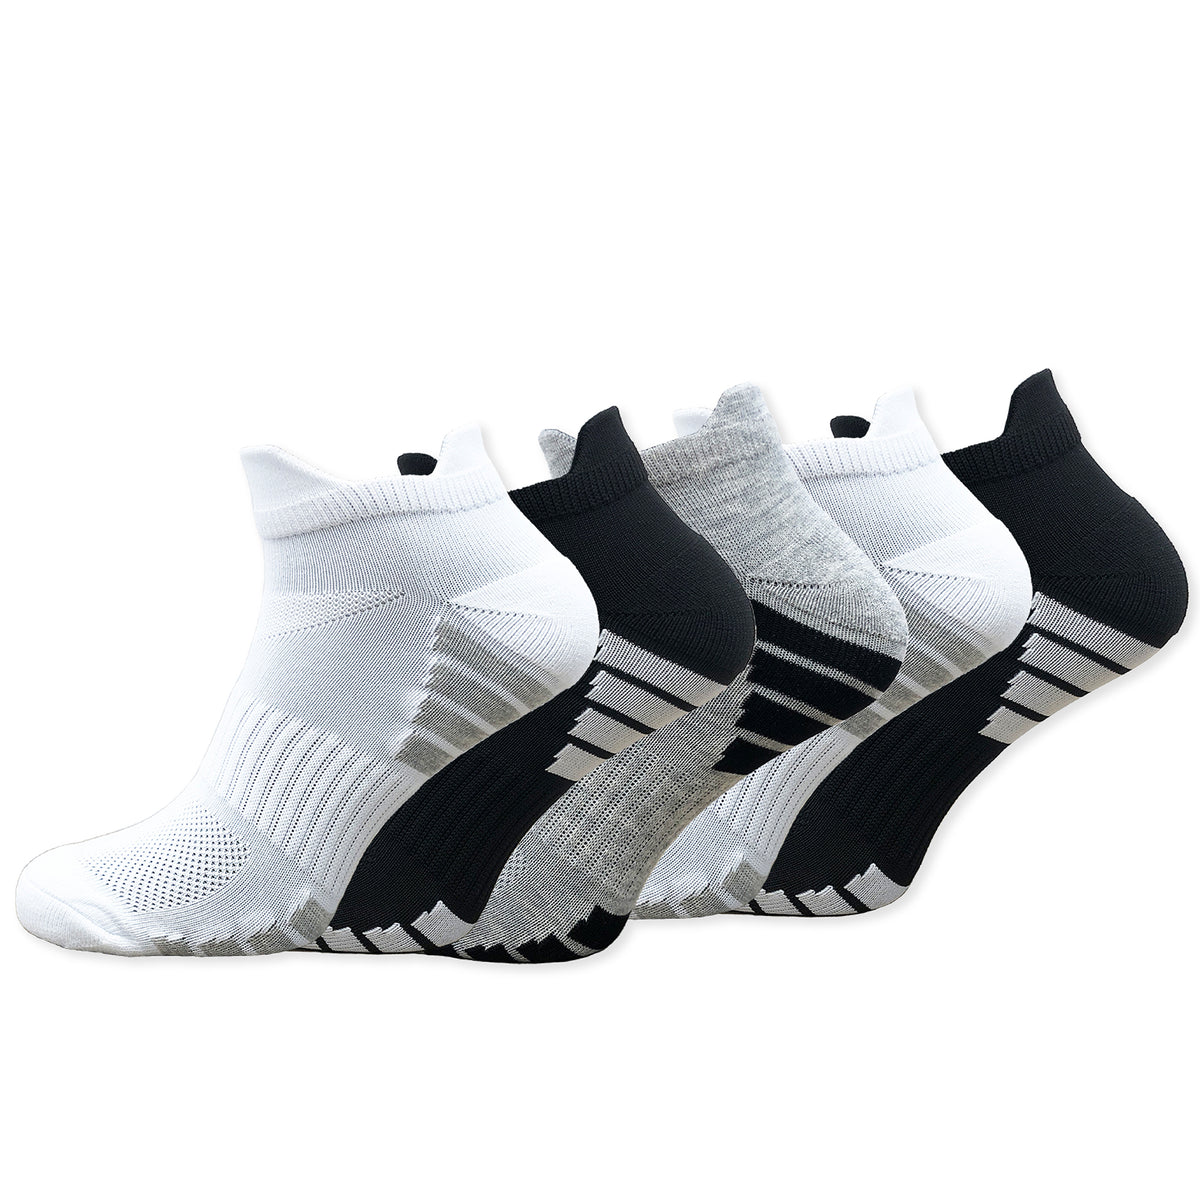 Mens 5 Pack Peformance Trainer Liner Sports Socks Assorted